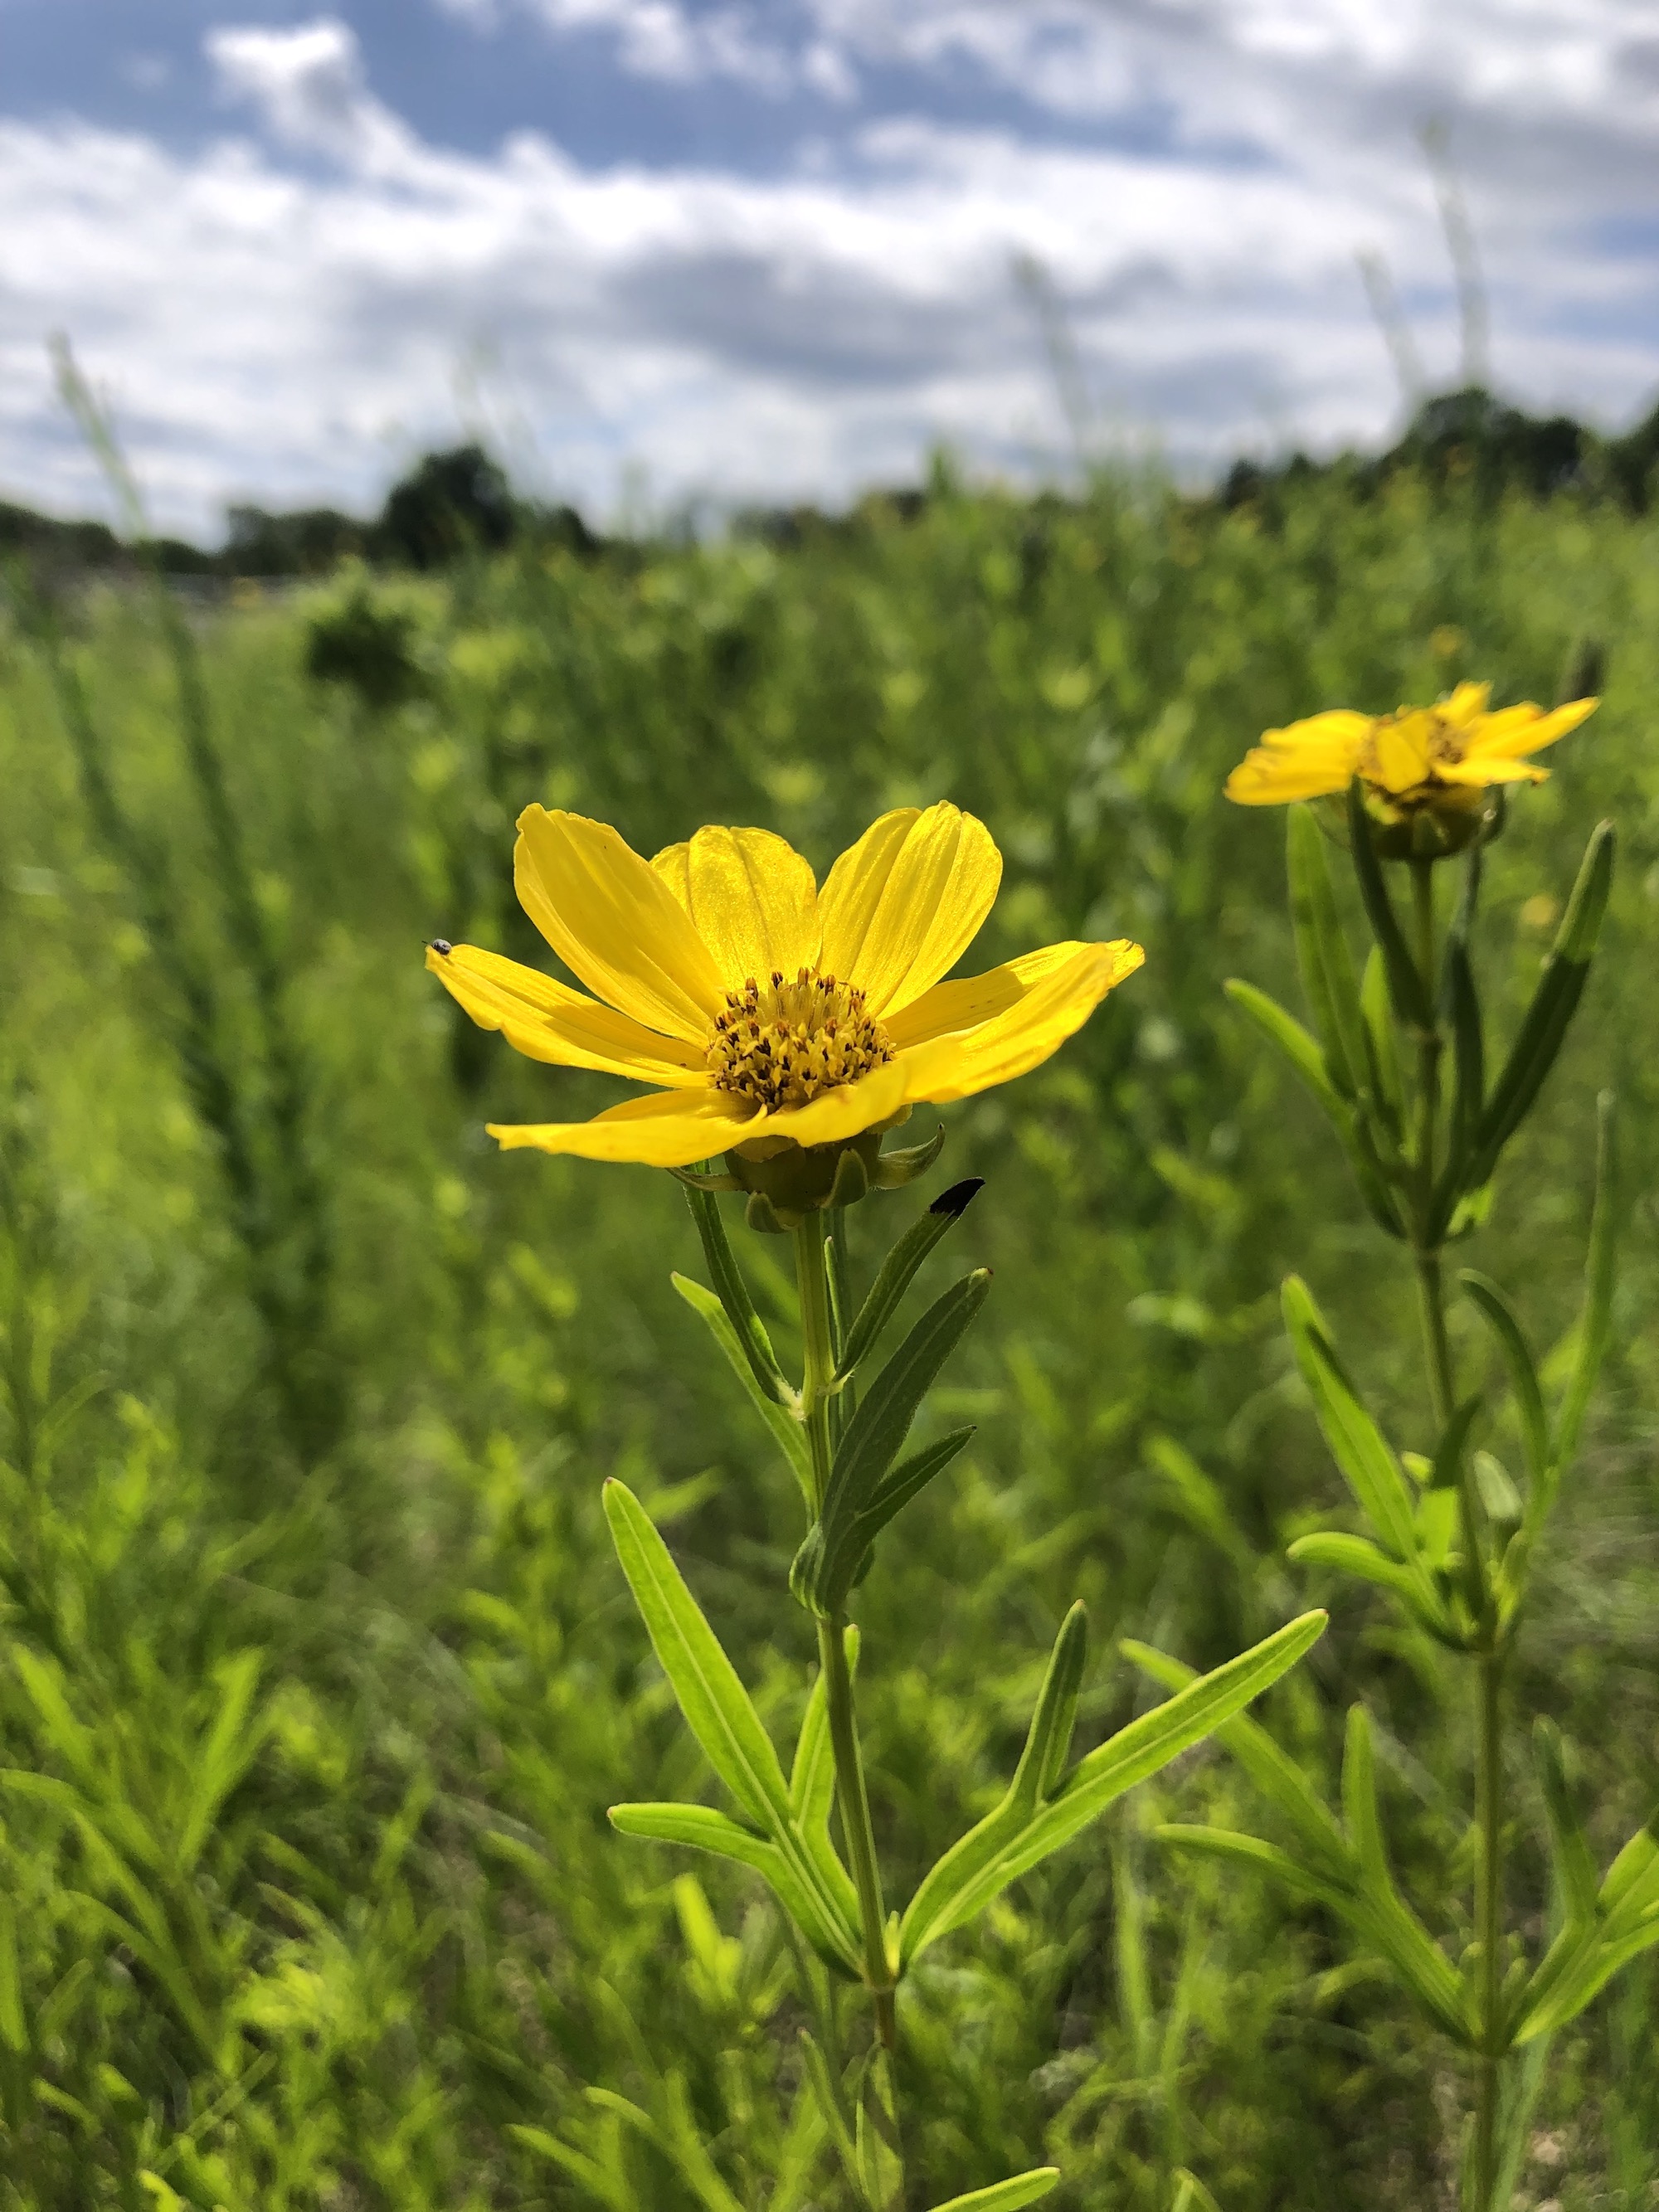 Prairie Coreopsis in UW Arboretum near Visitors Center in Madison, Wisconsin on June 22, 2021.